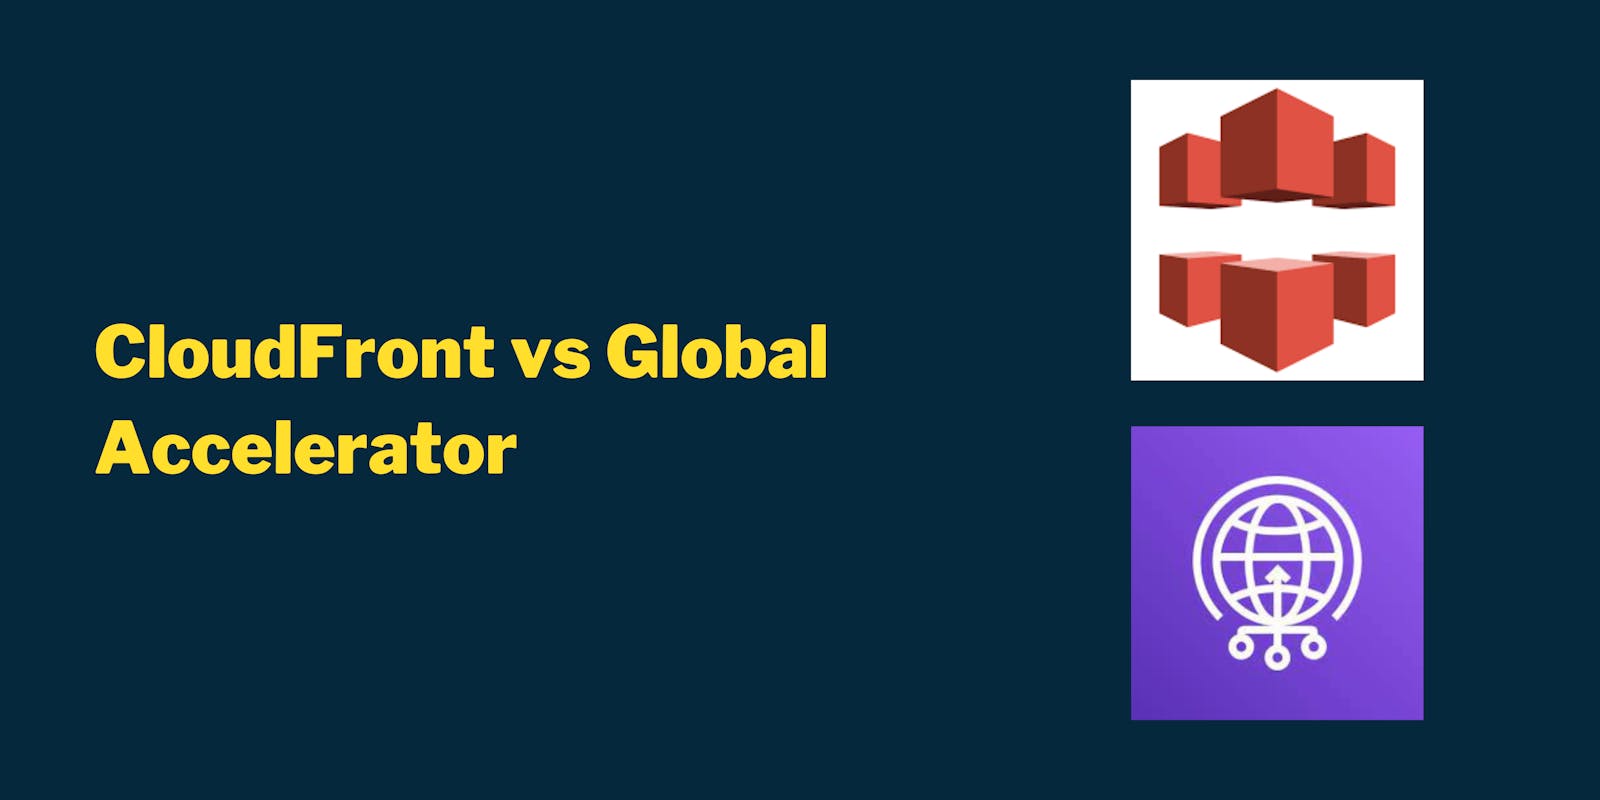 CloudFront vs Global Accelerator